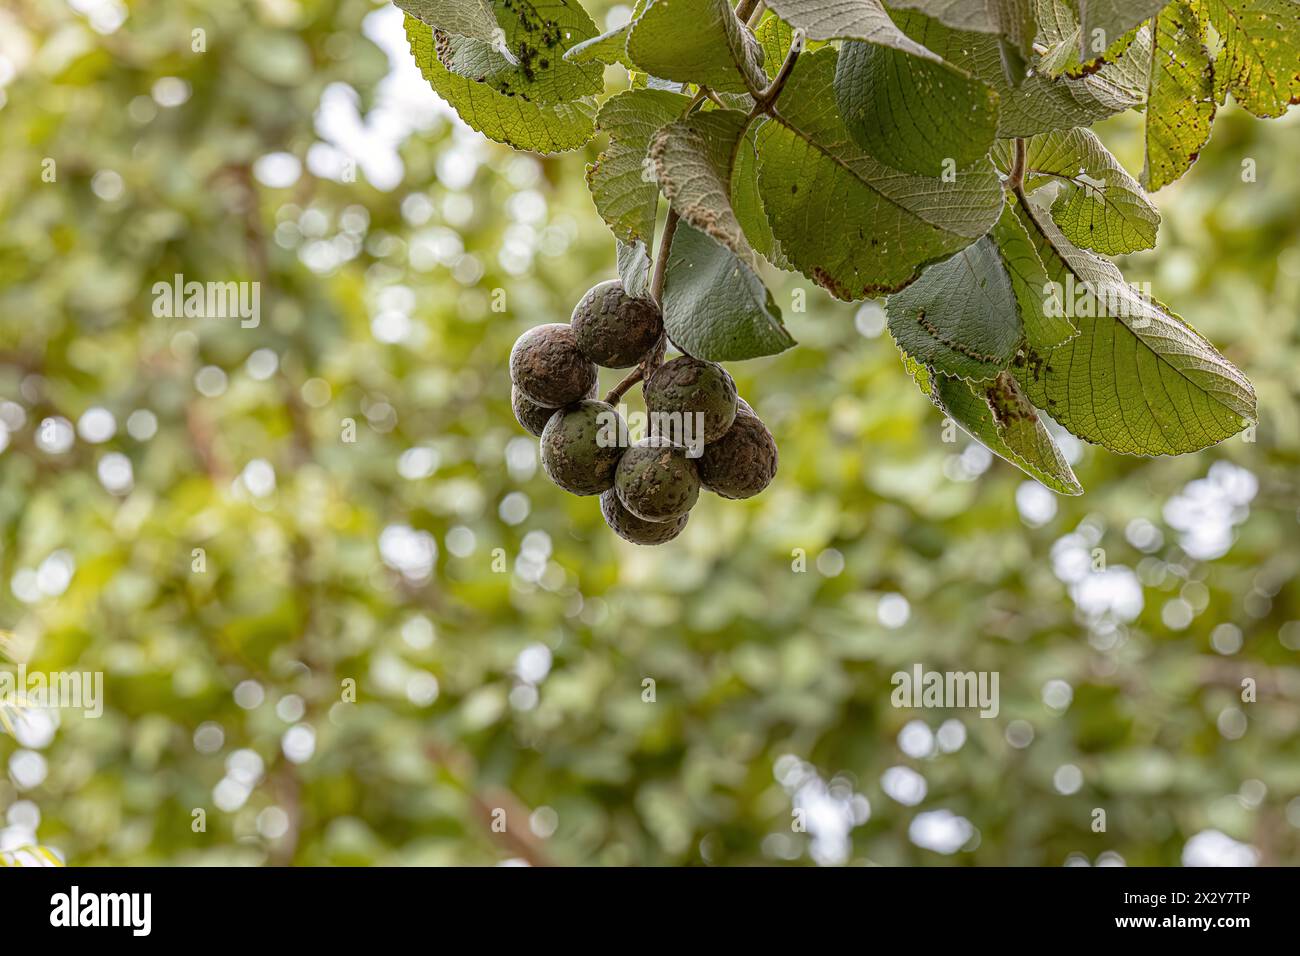 Pekea Nut albero frutto della specie Caryocar brasiliense Foto Stock